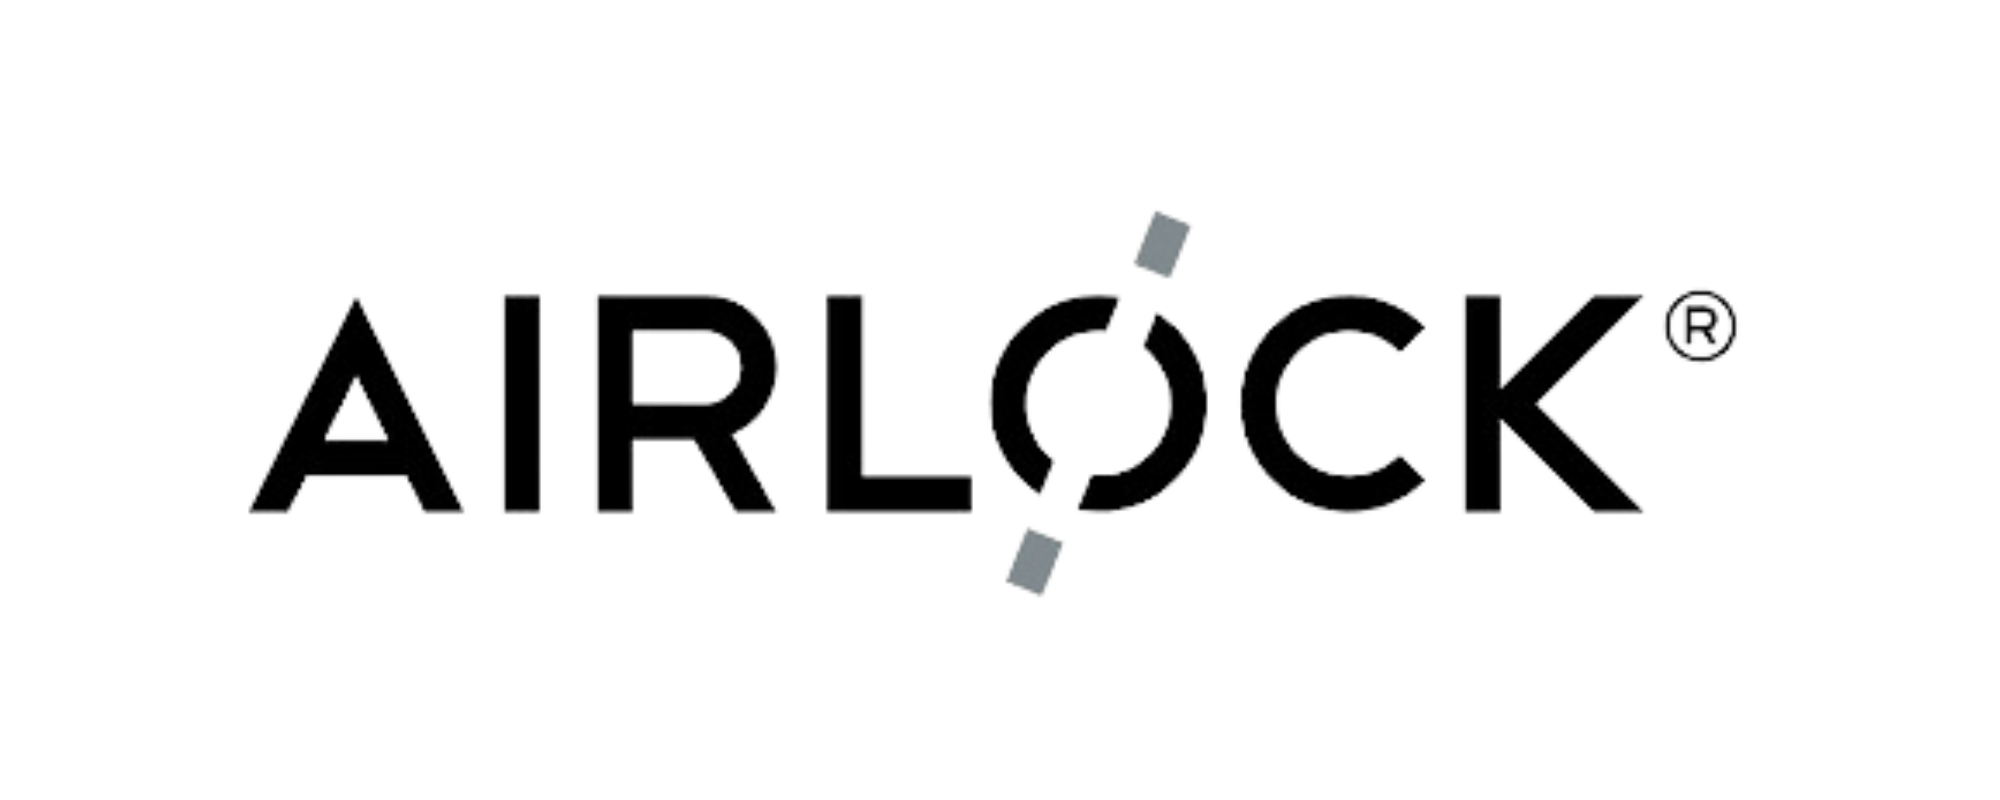 Airlock_Logo_Partner Page 